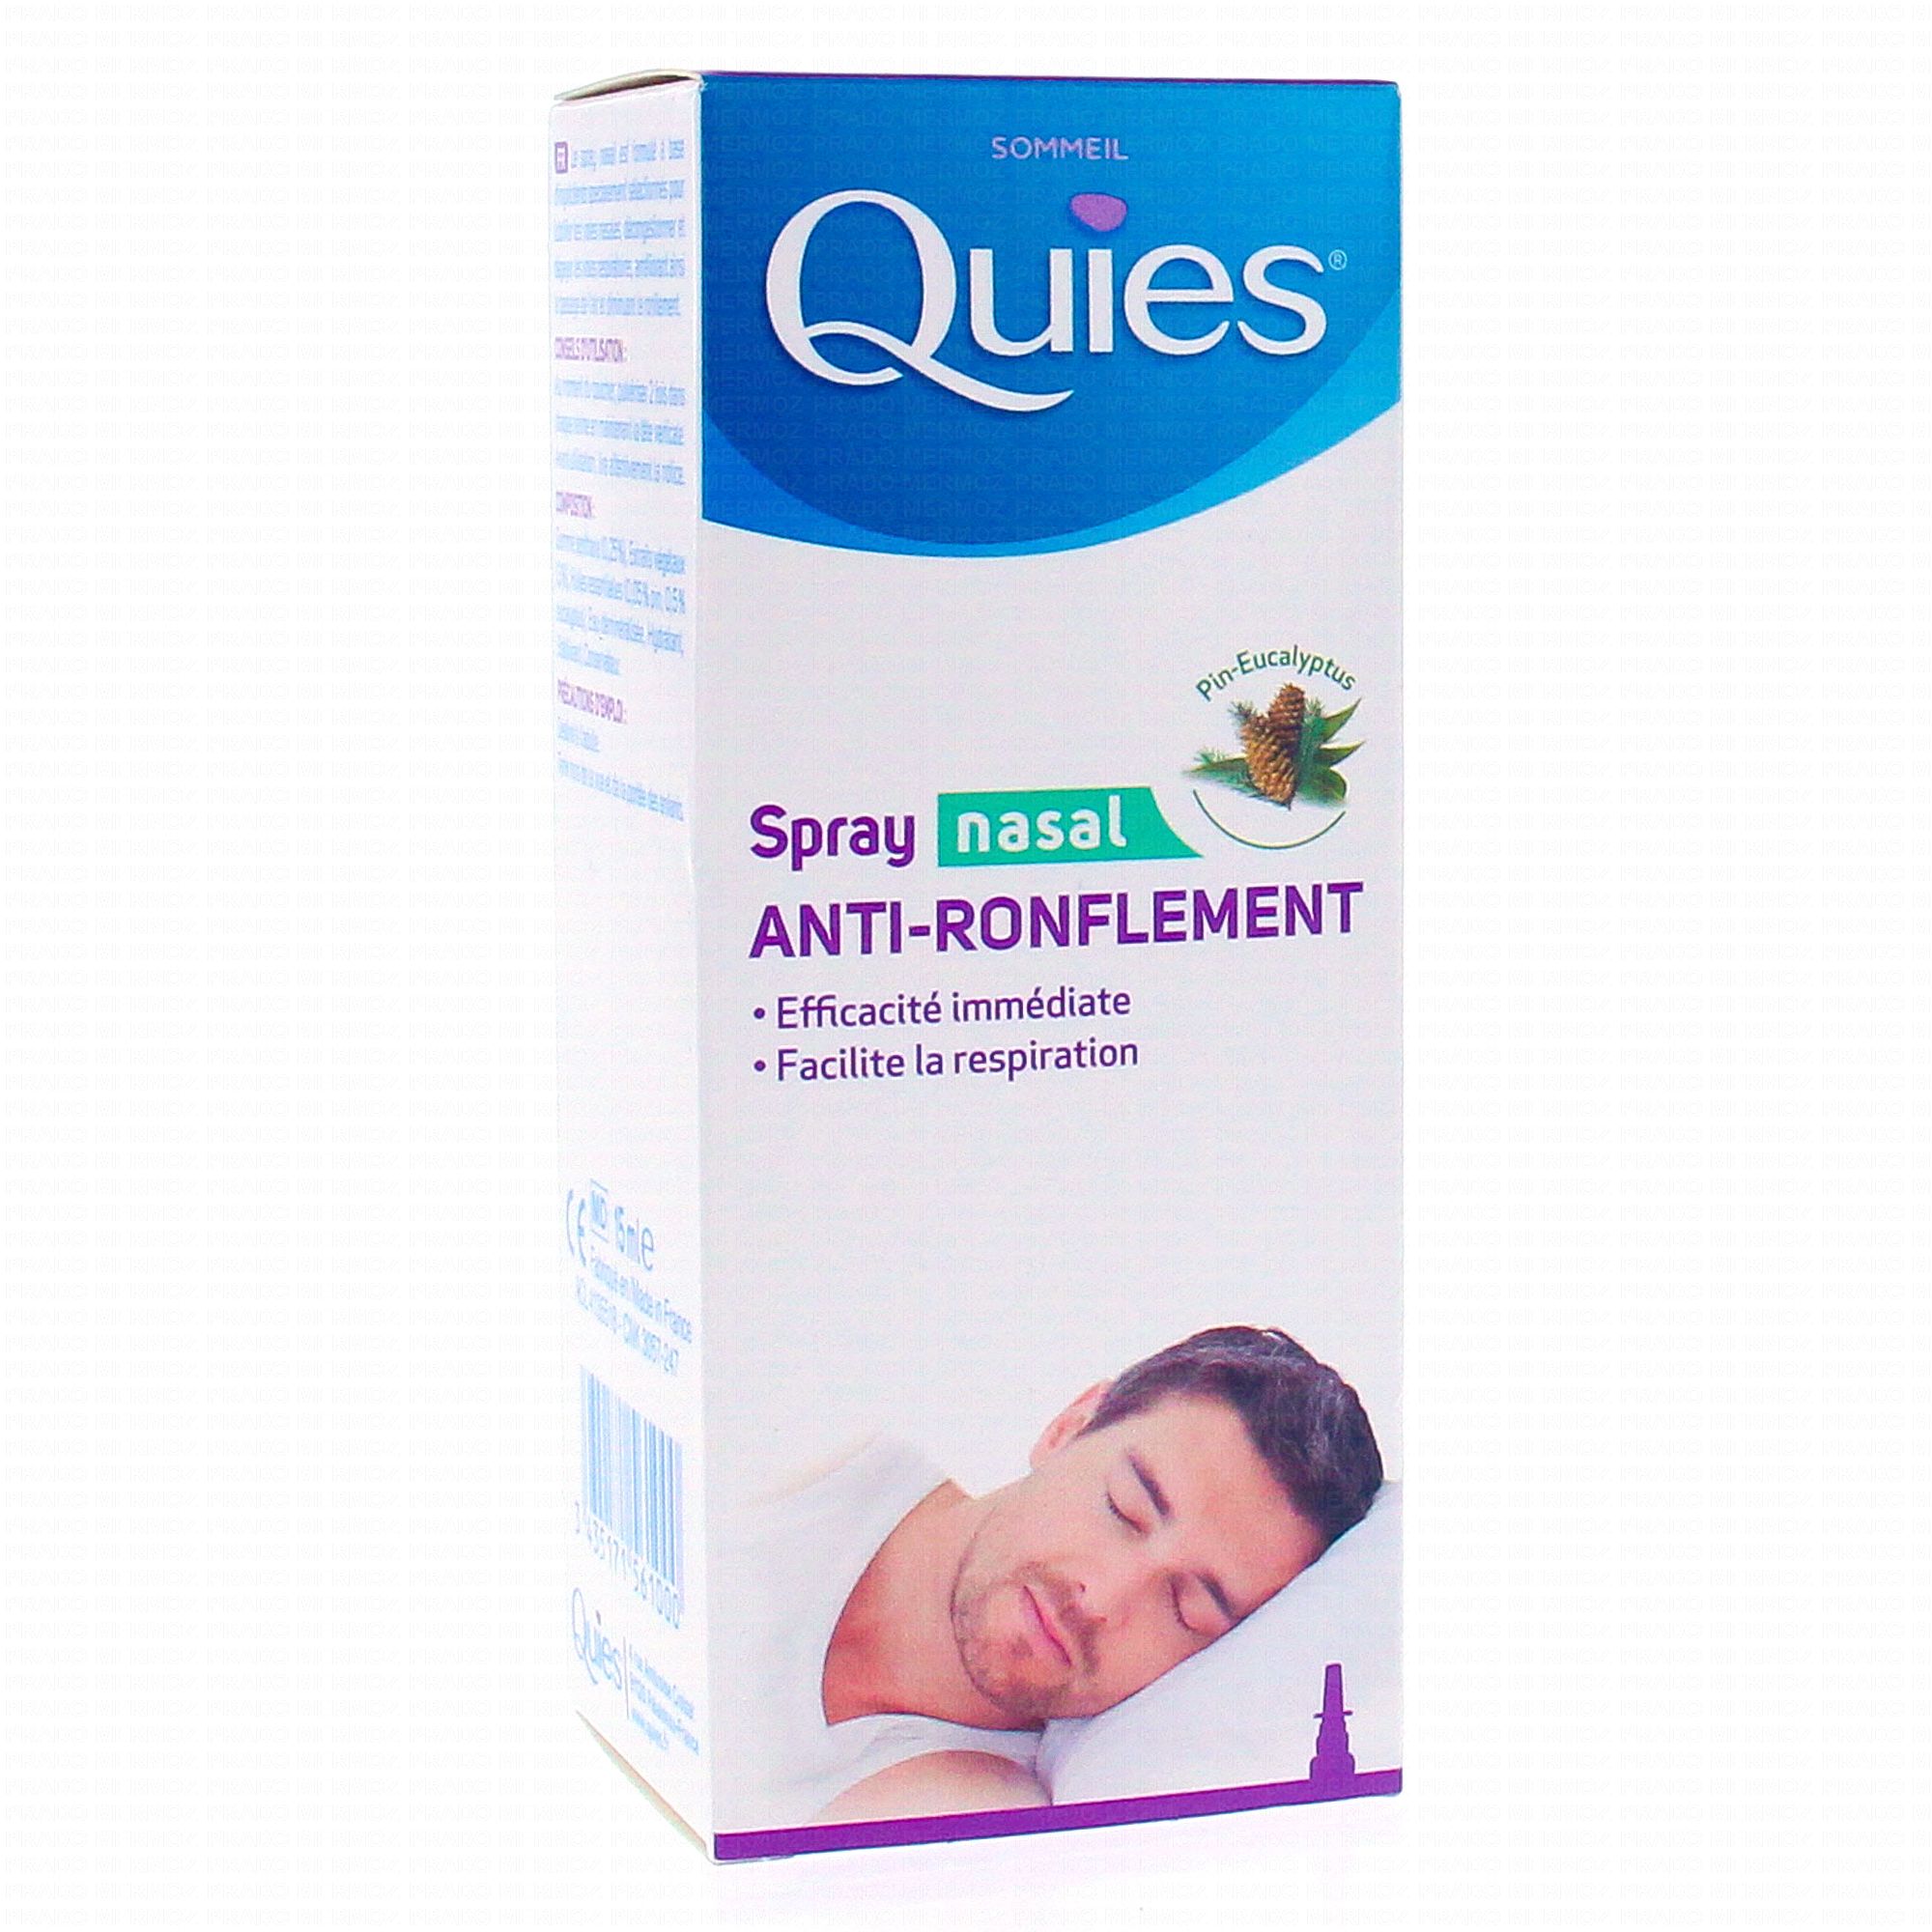 QUIES Anti-ronflement spray nasal 15ml - Parapharmacie Prado Mermoz